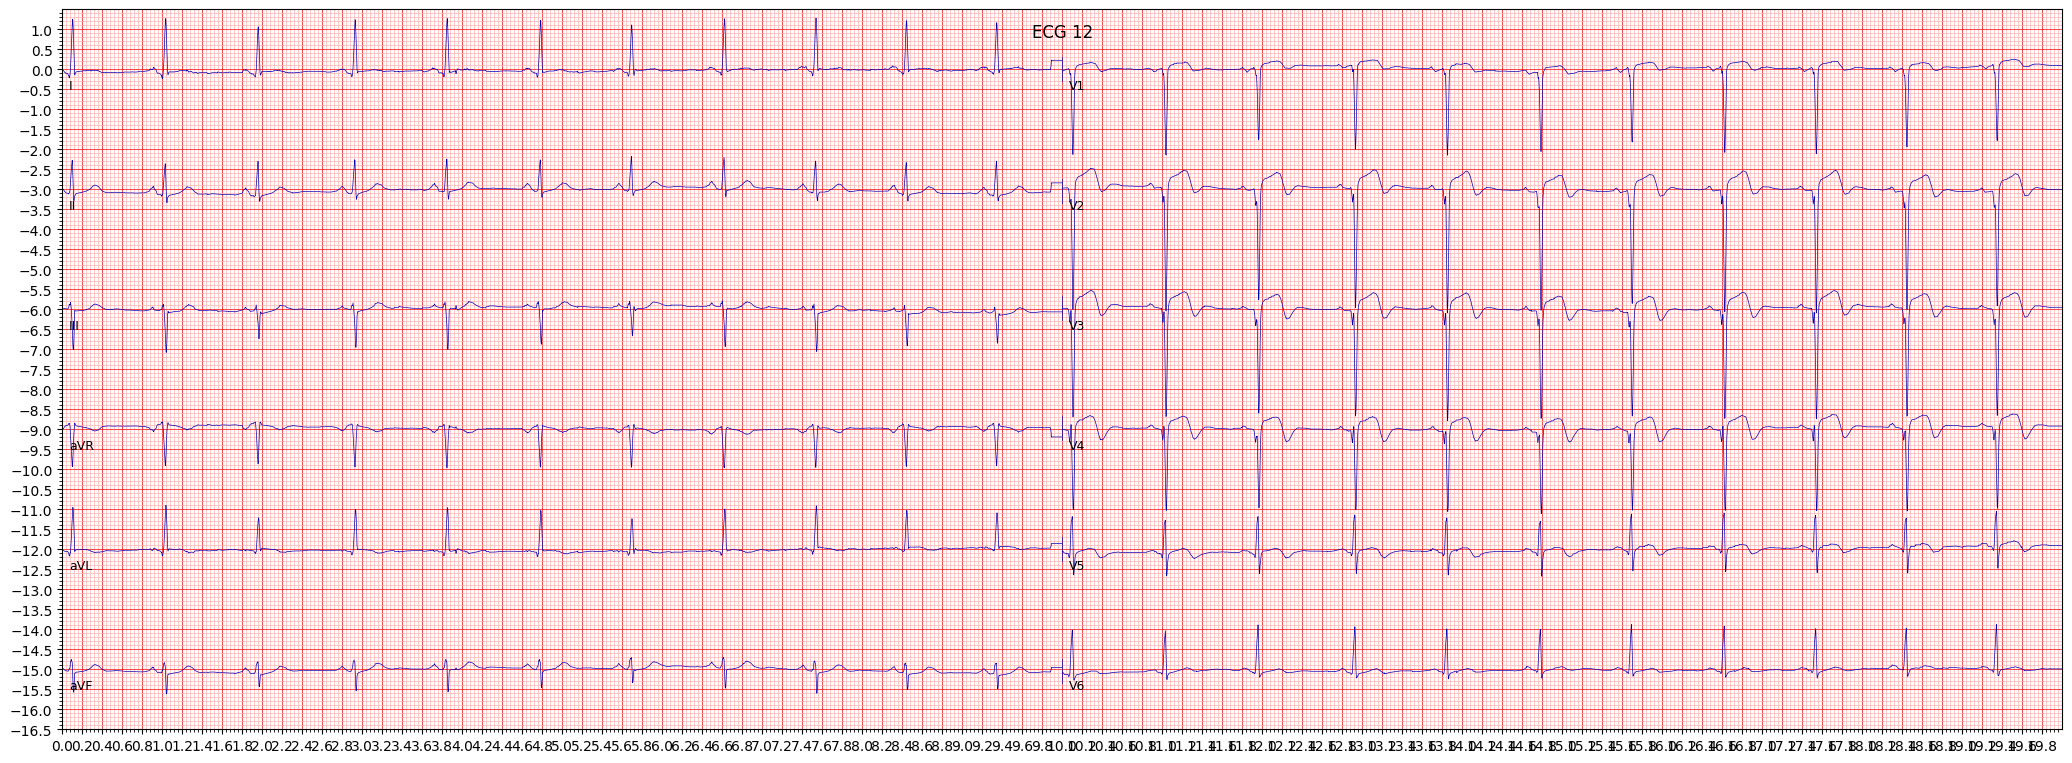 anteroseptal myocardial infarction (ASMI) example 518